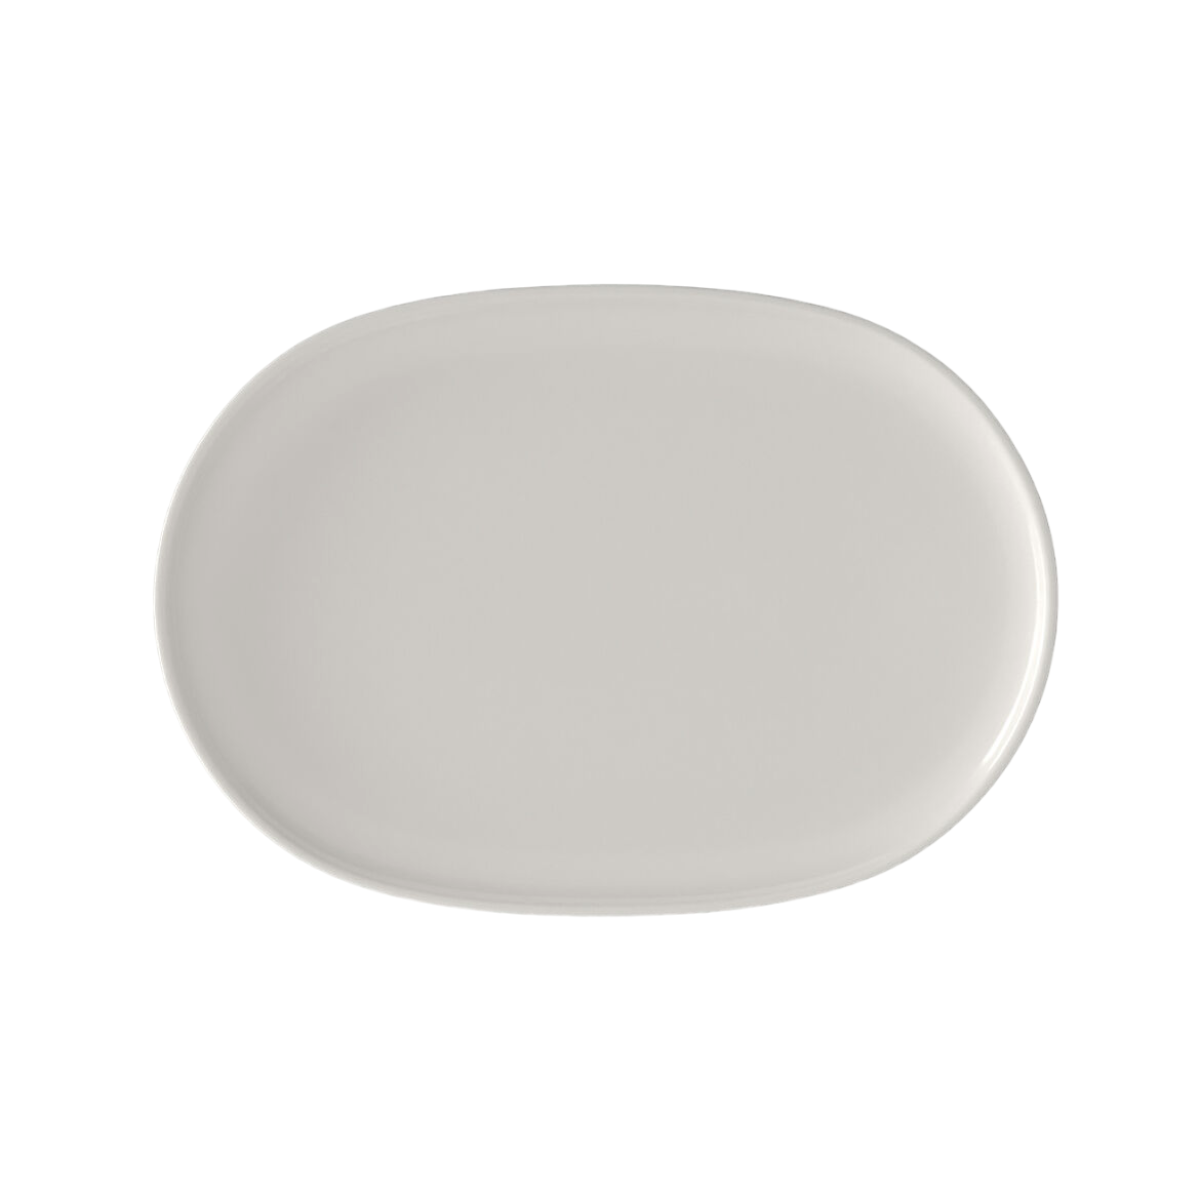 Artesano Original Oval Platter